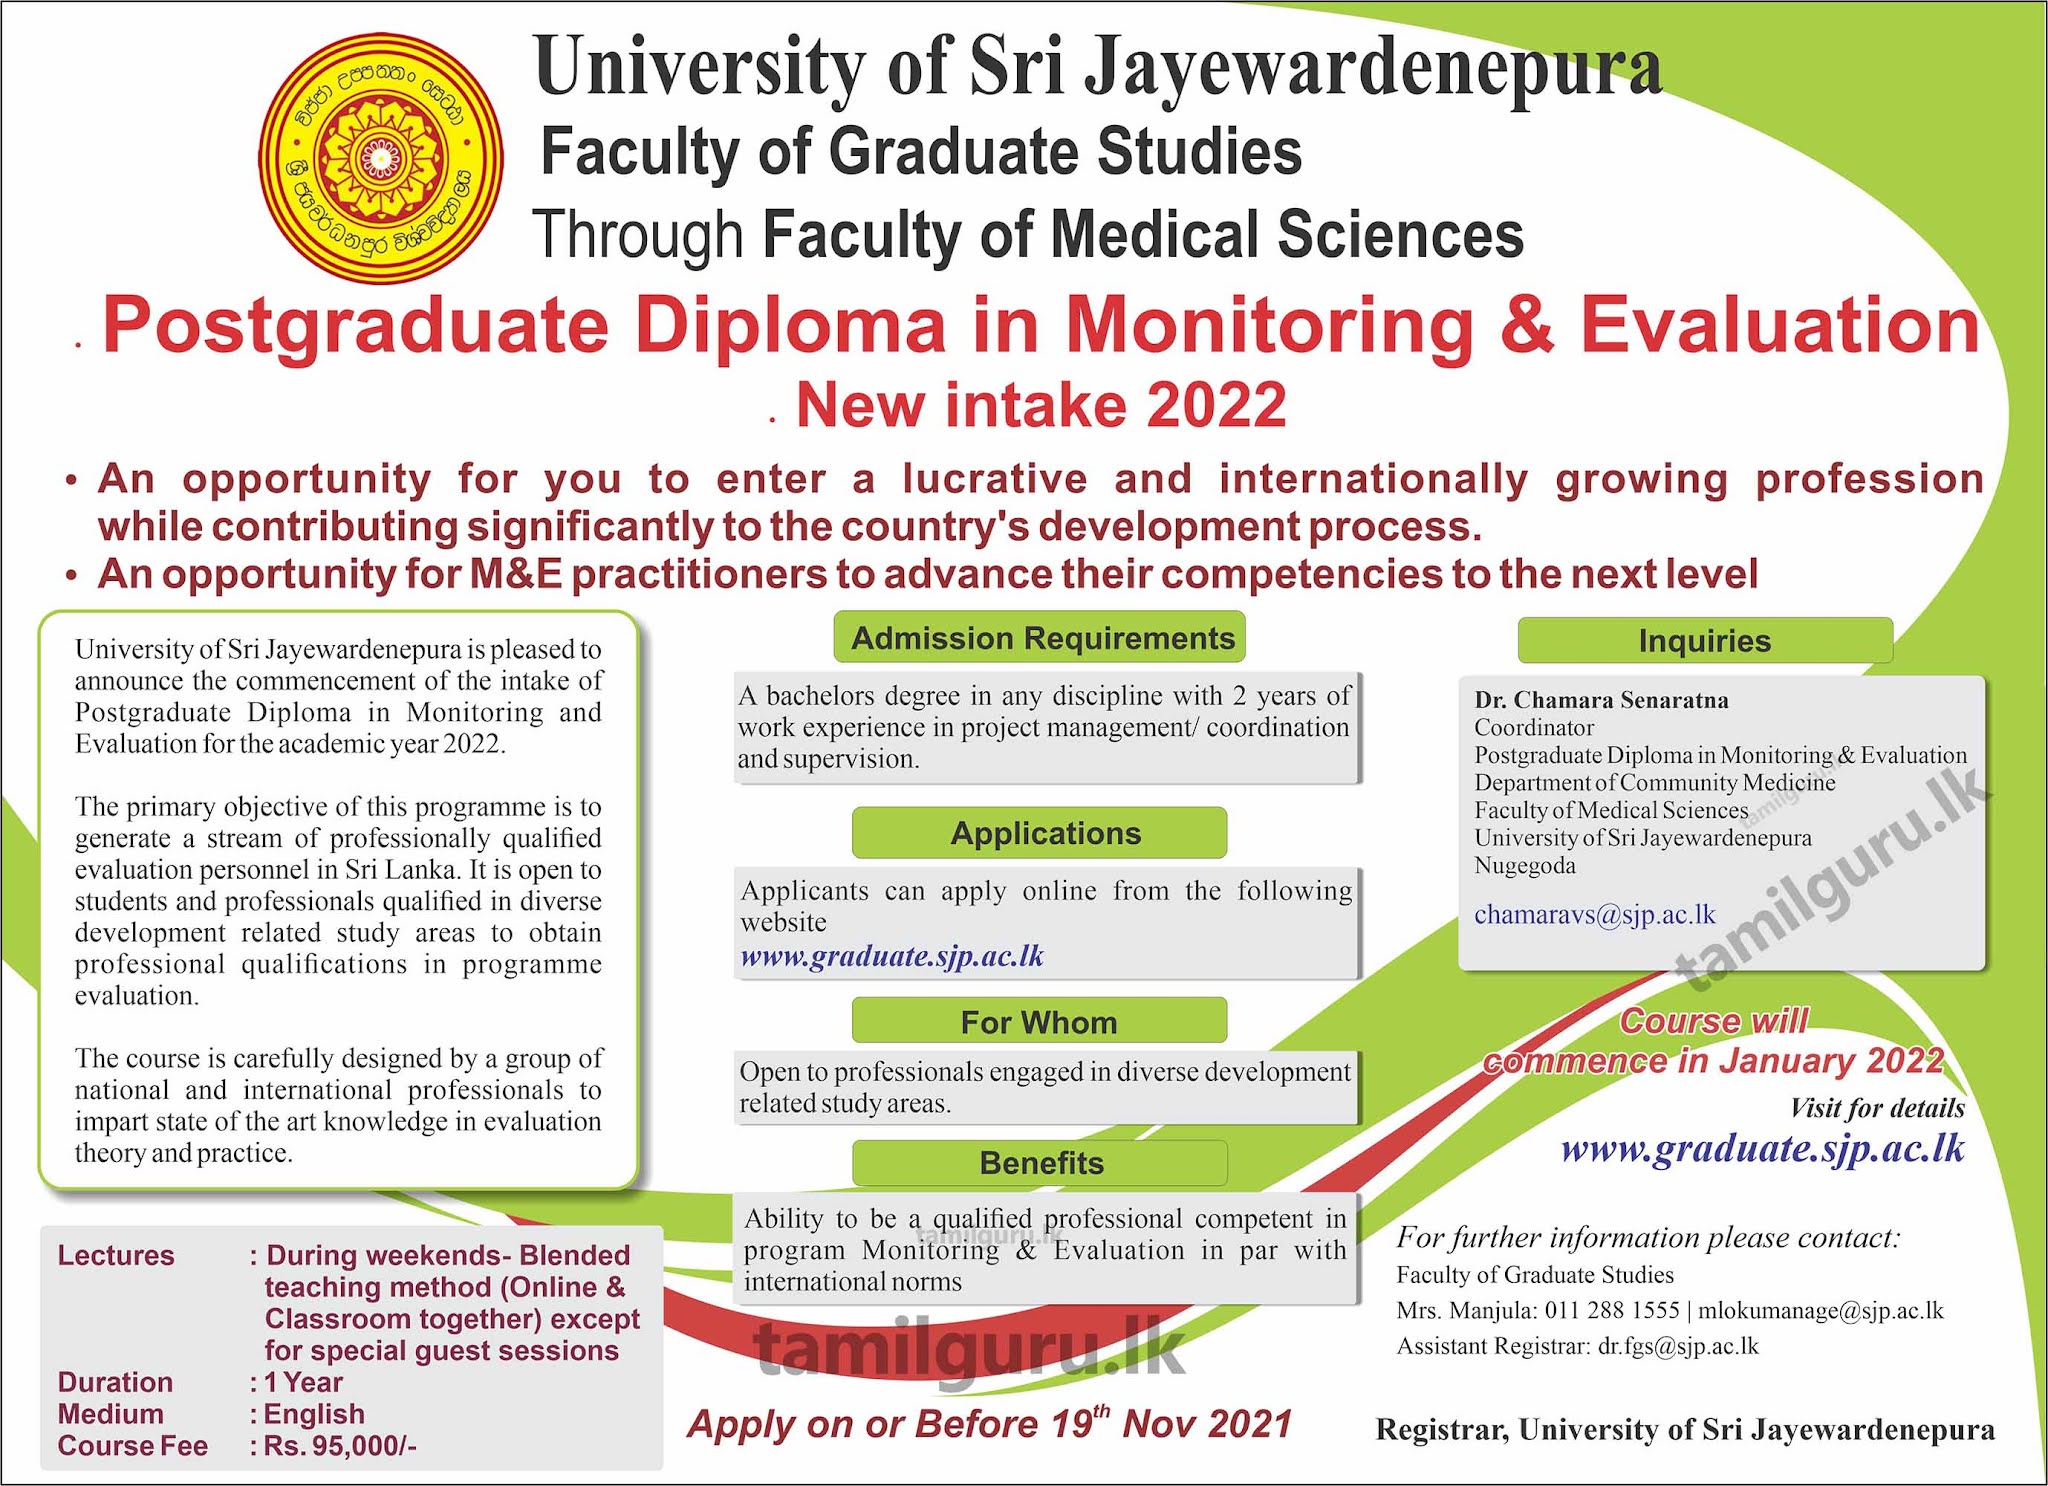 Postgraduate Diploma in Monitoring & Evaluation 2022 - University of Sri Jayewardenepura